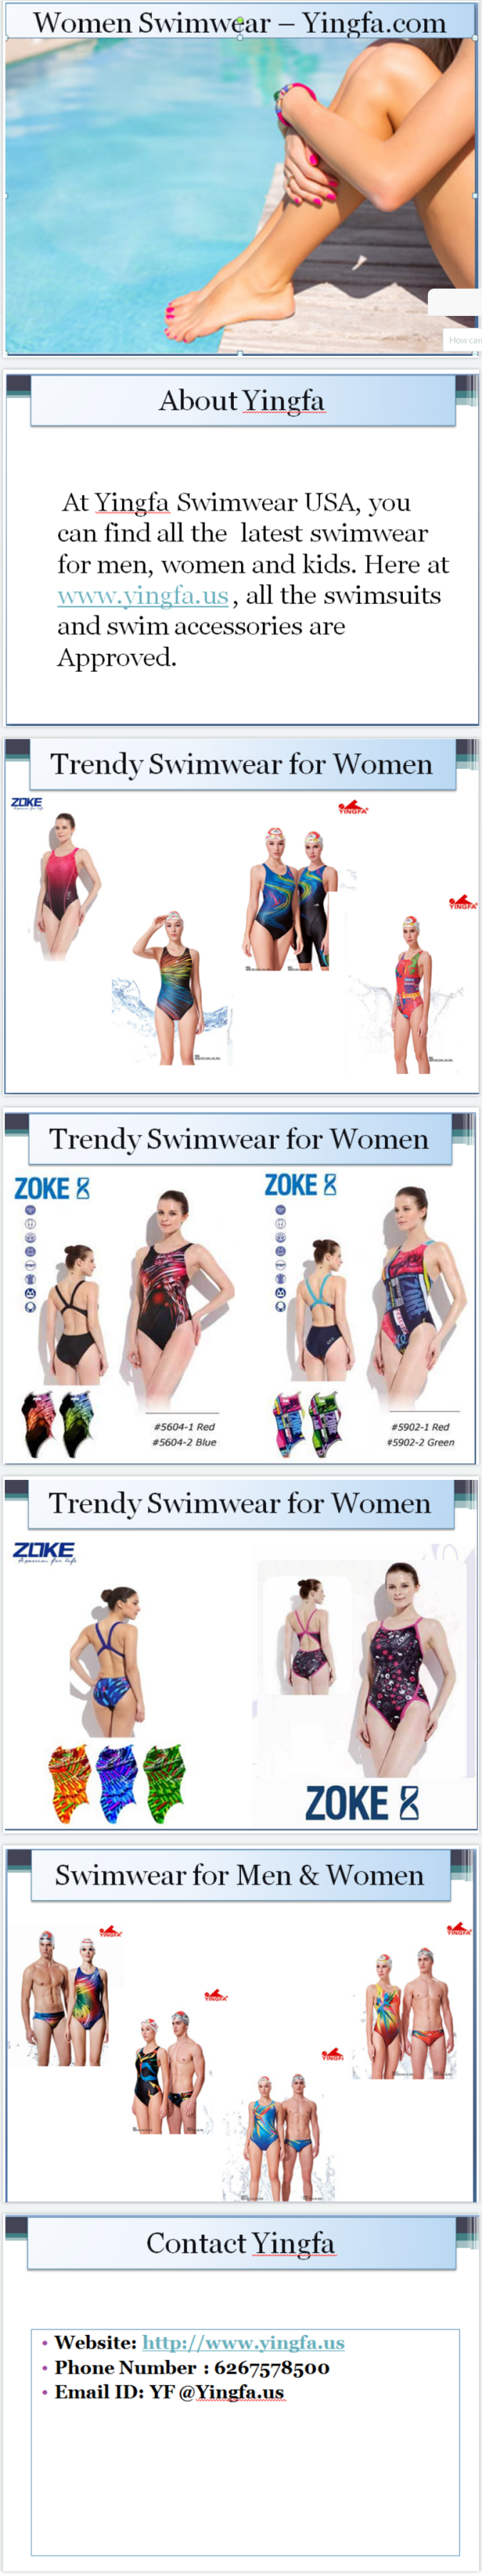 Women Competition Swimwear